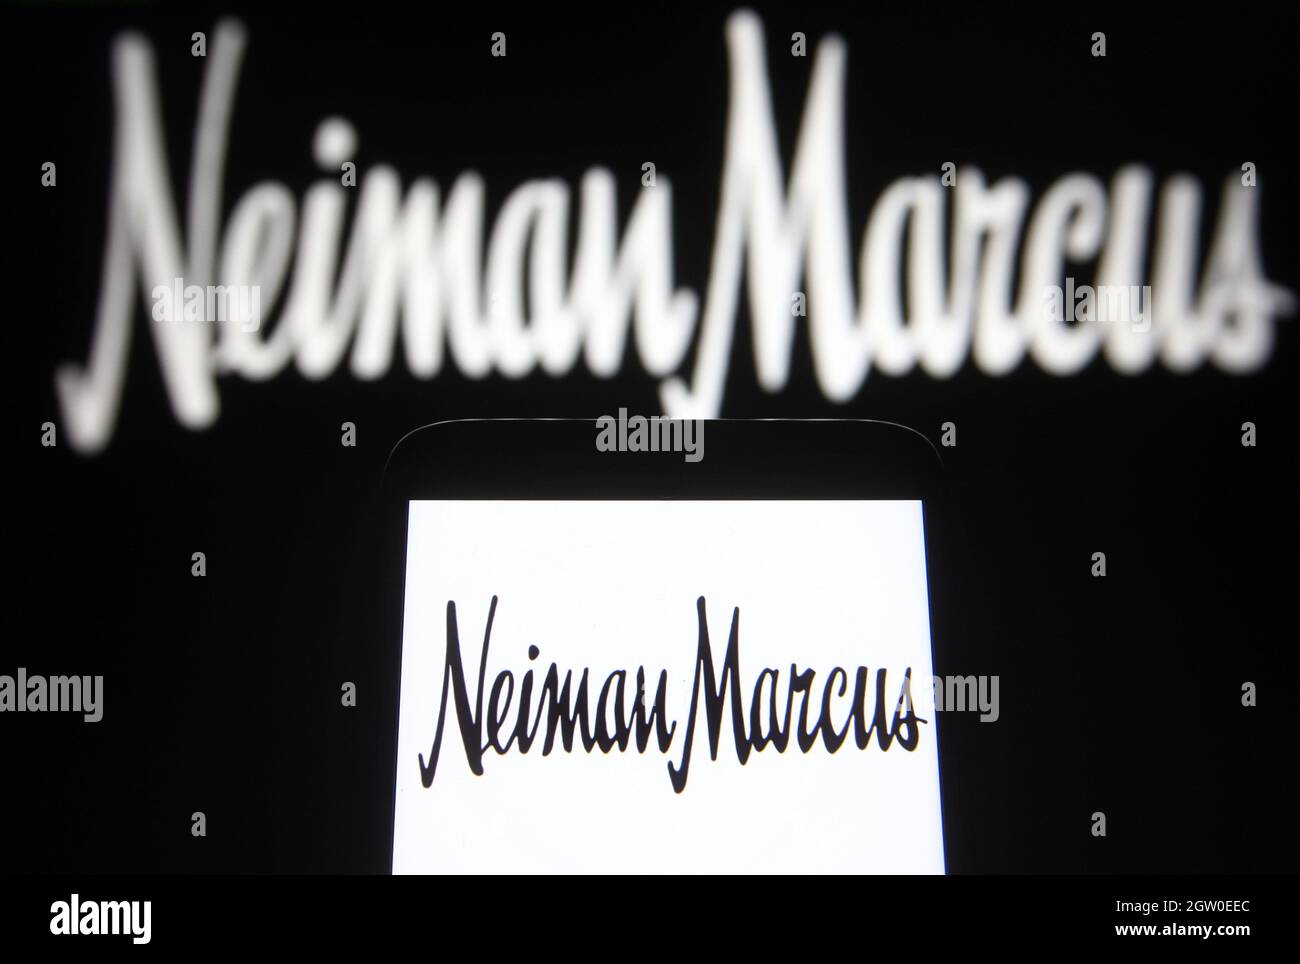 neiman marcus group